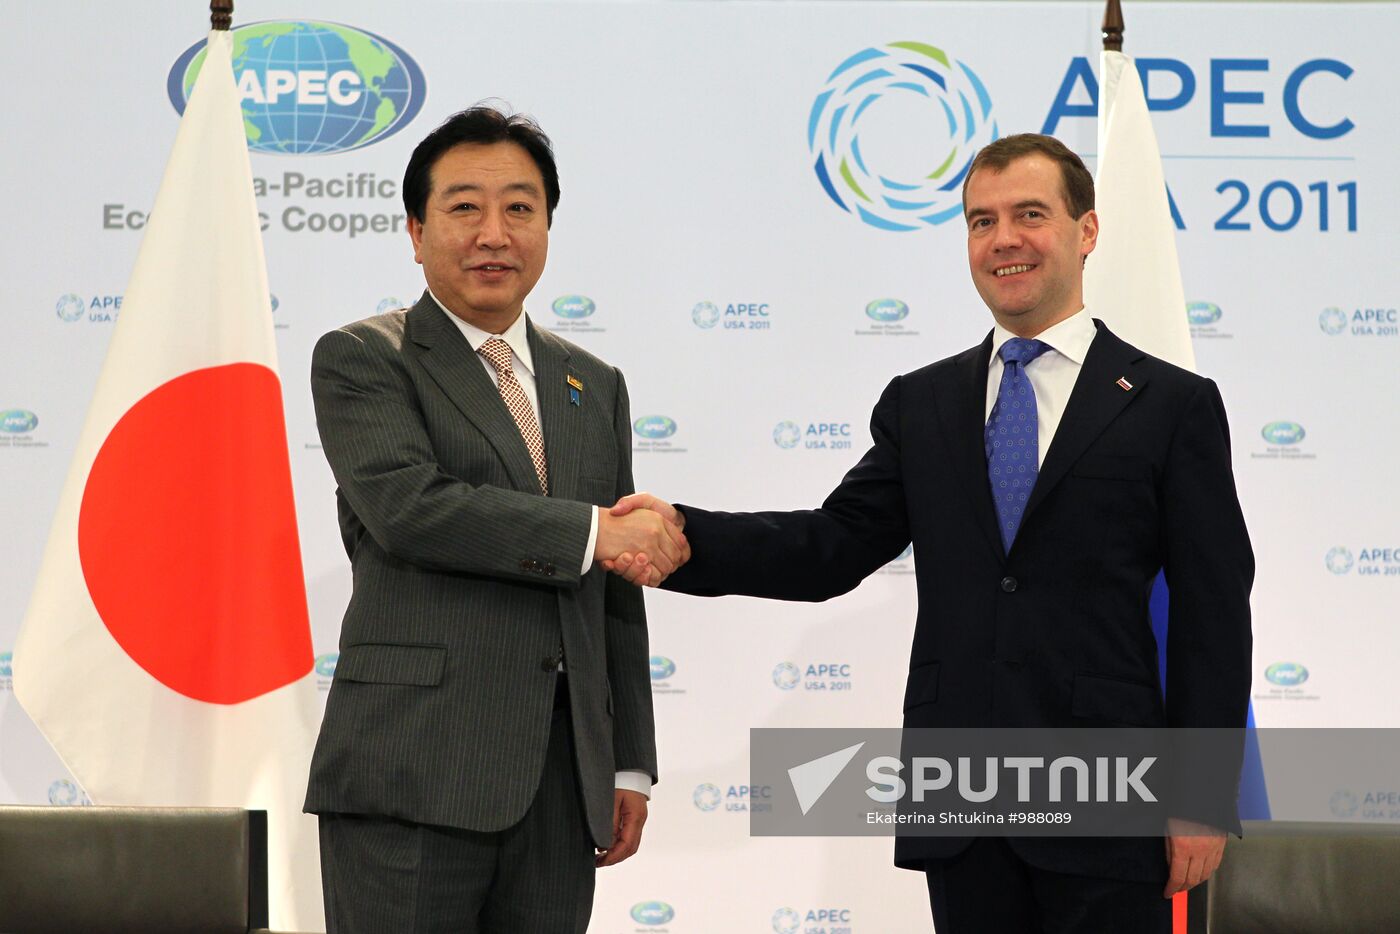 Dmitry Medvedev takes part in APEC summit